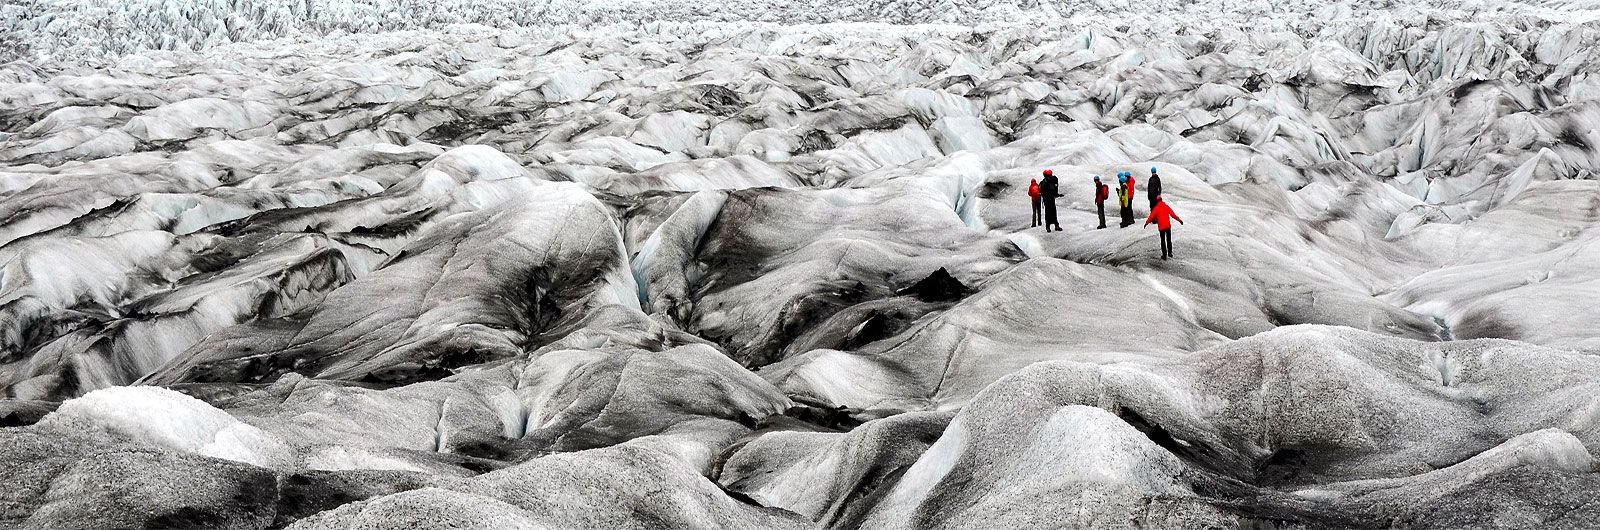 paseo glaciar en groenlandia